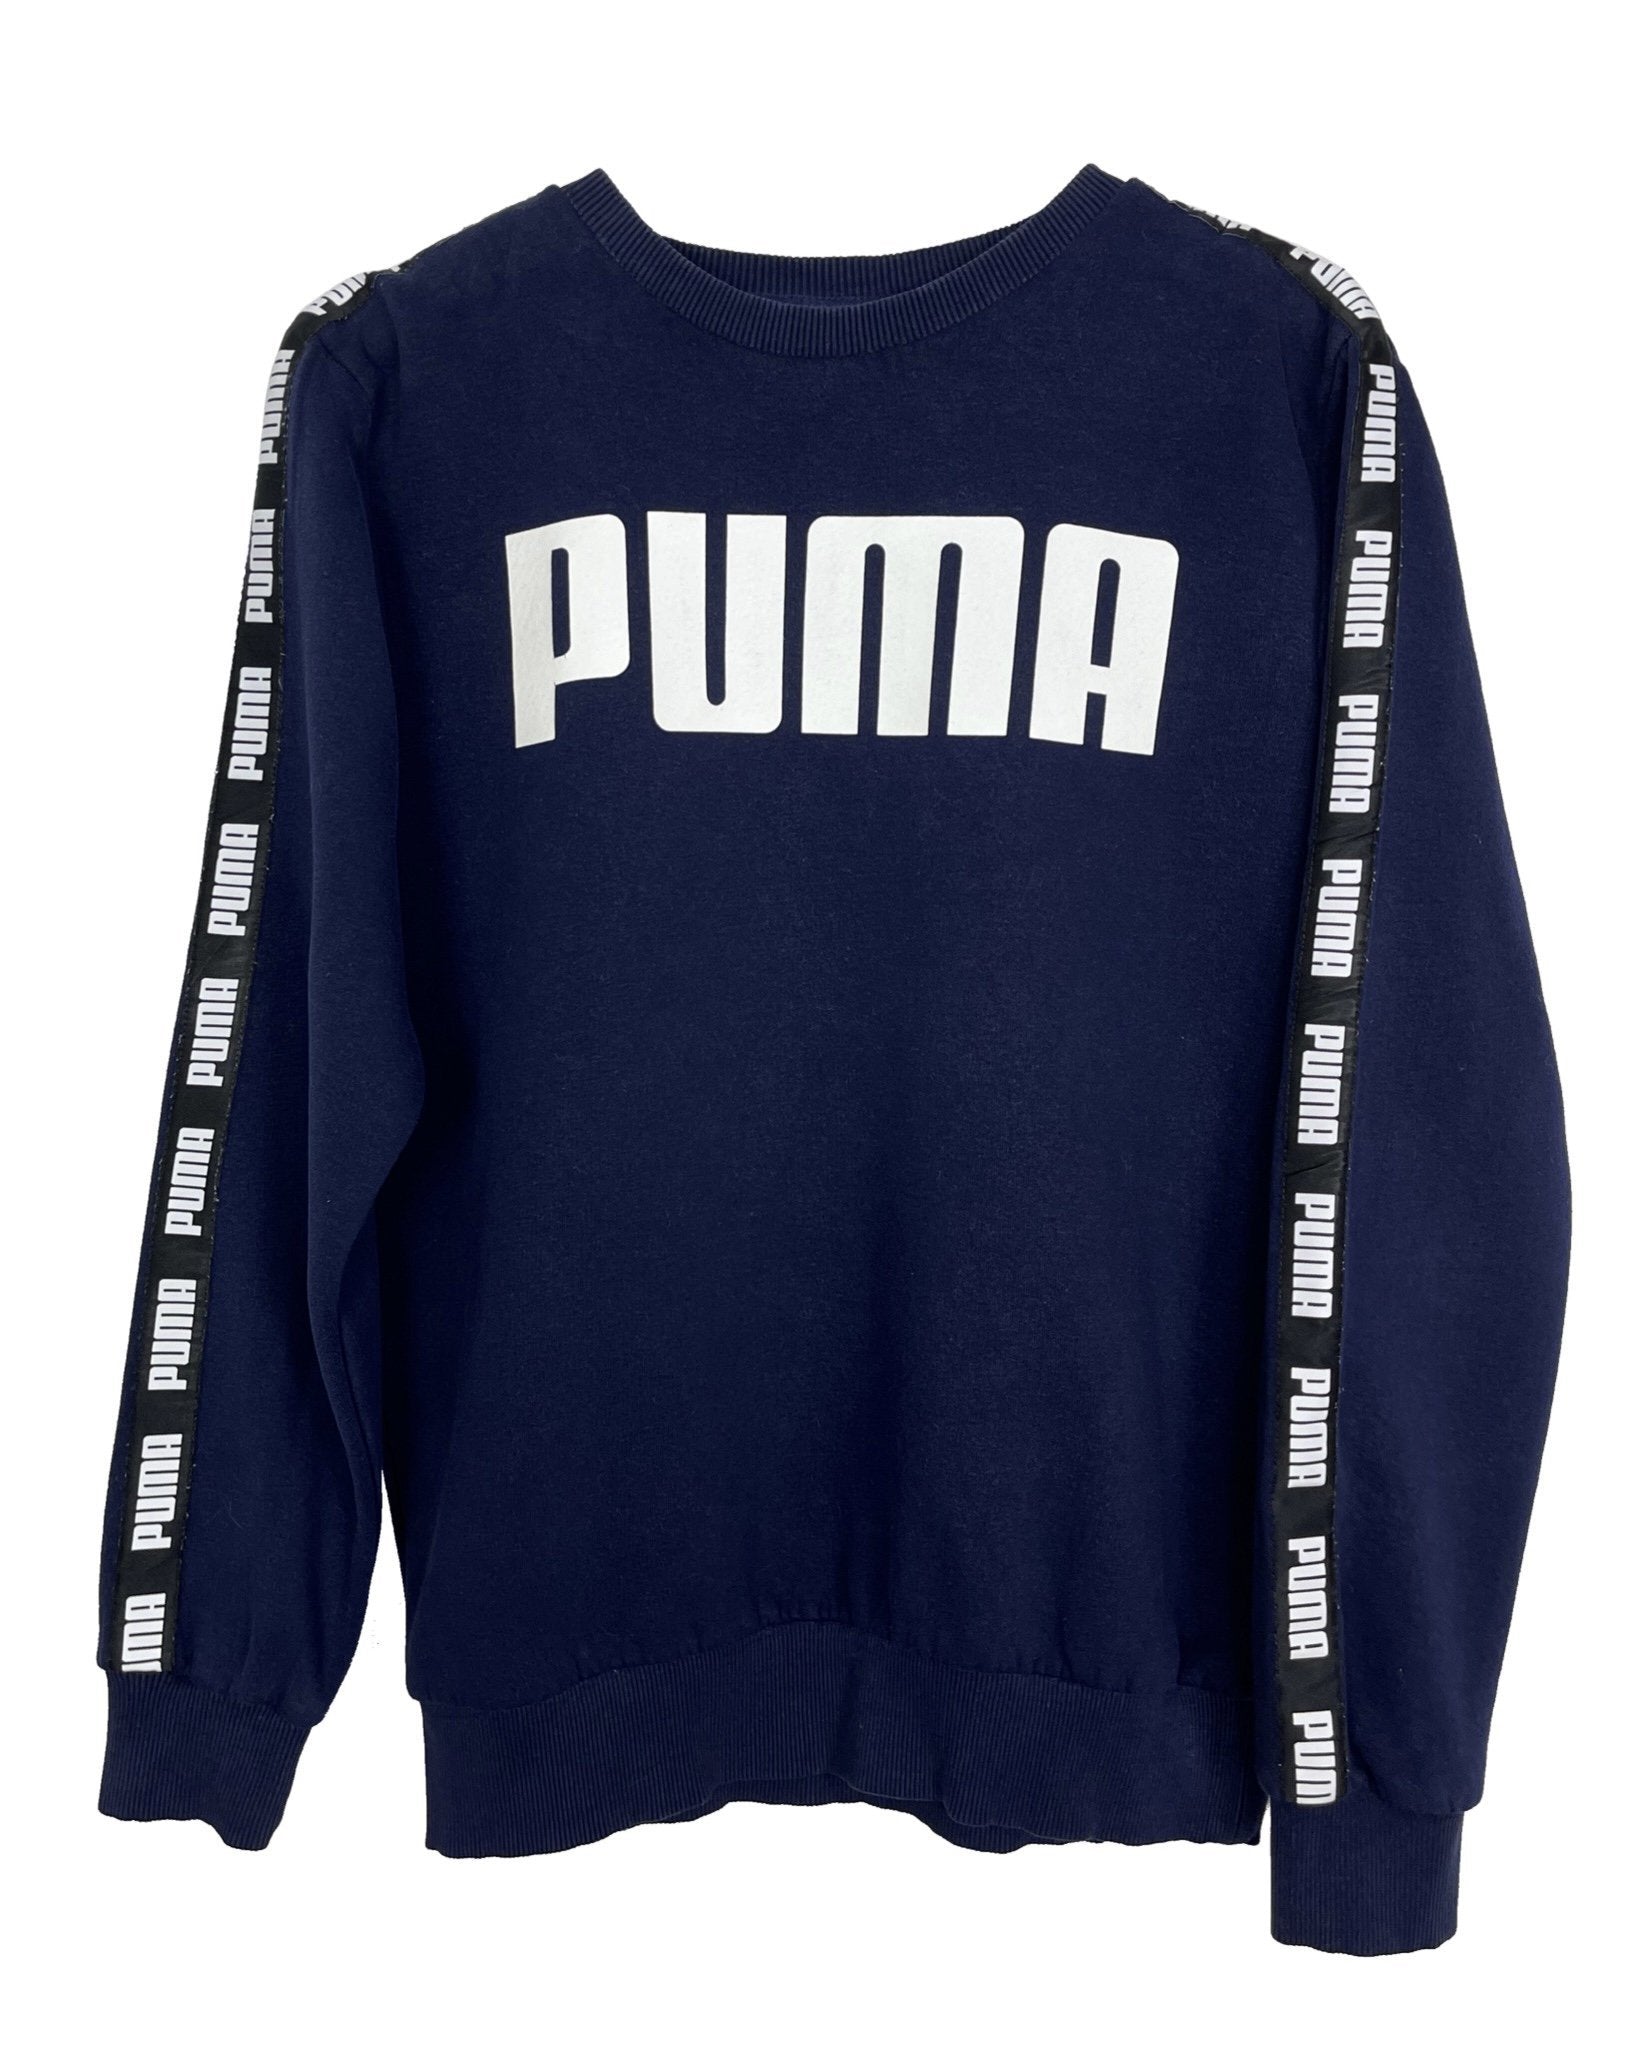  Sweatshirt Puma Sweat - S - PLOMOSTORE